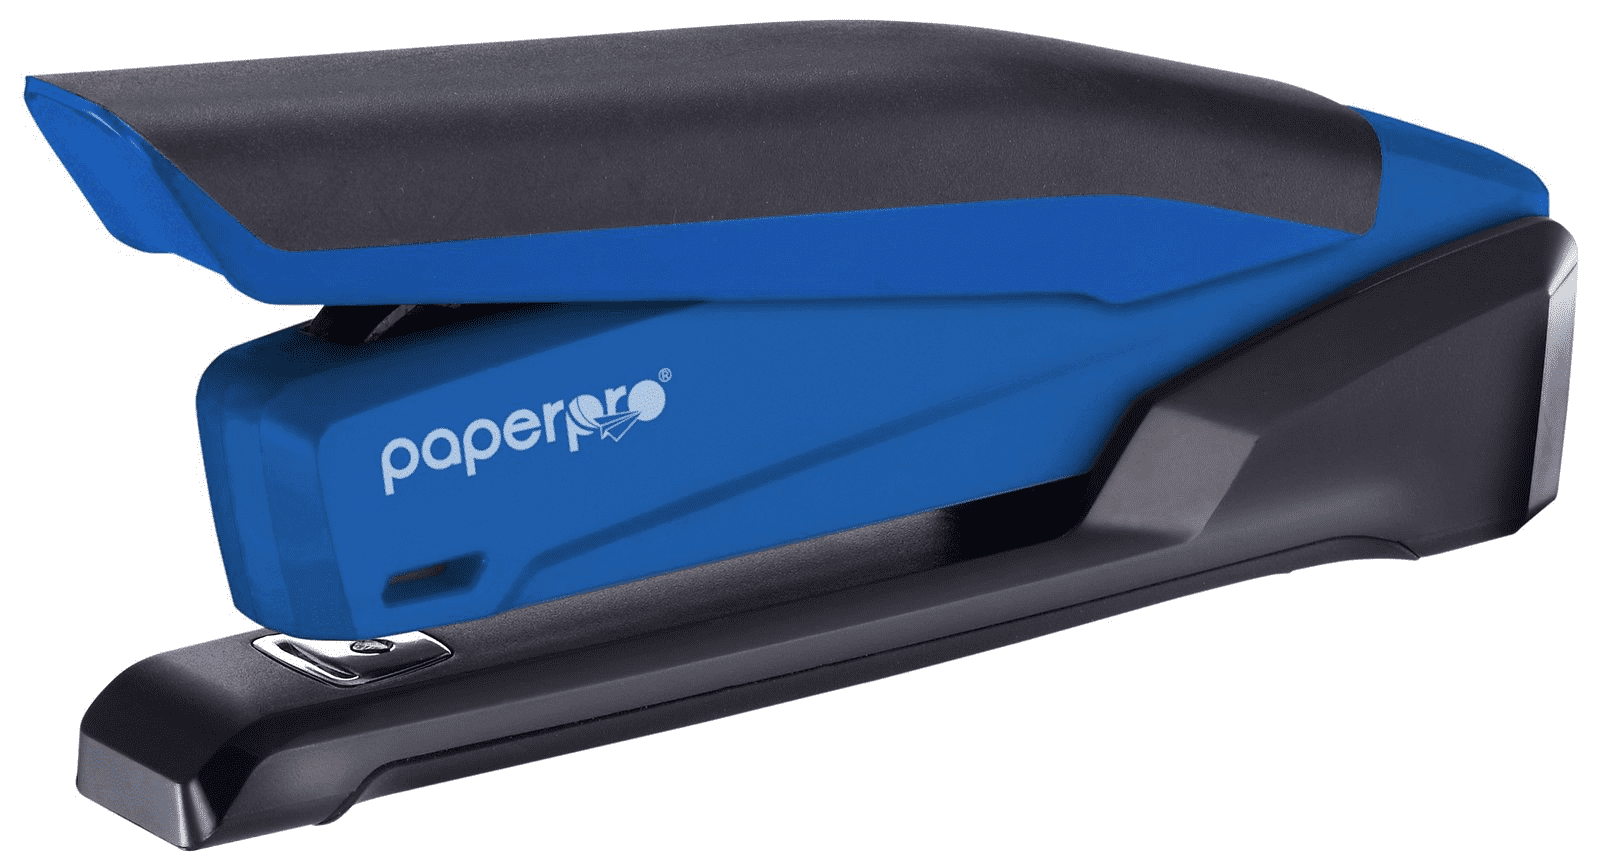 Picture of Accentra- Inc. ACI1122 Stapler- Staples 20 Sheets- Rubber Handle- Translucent Blue